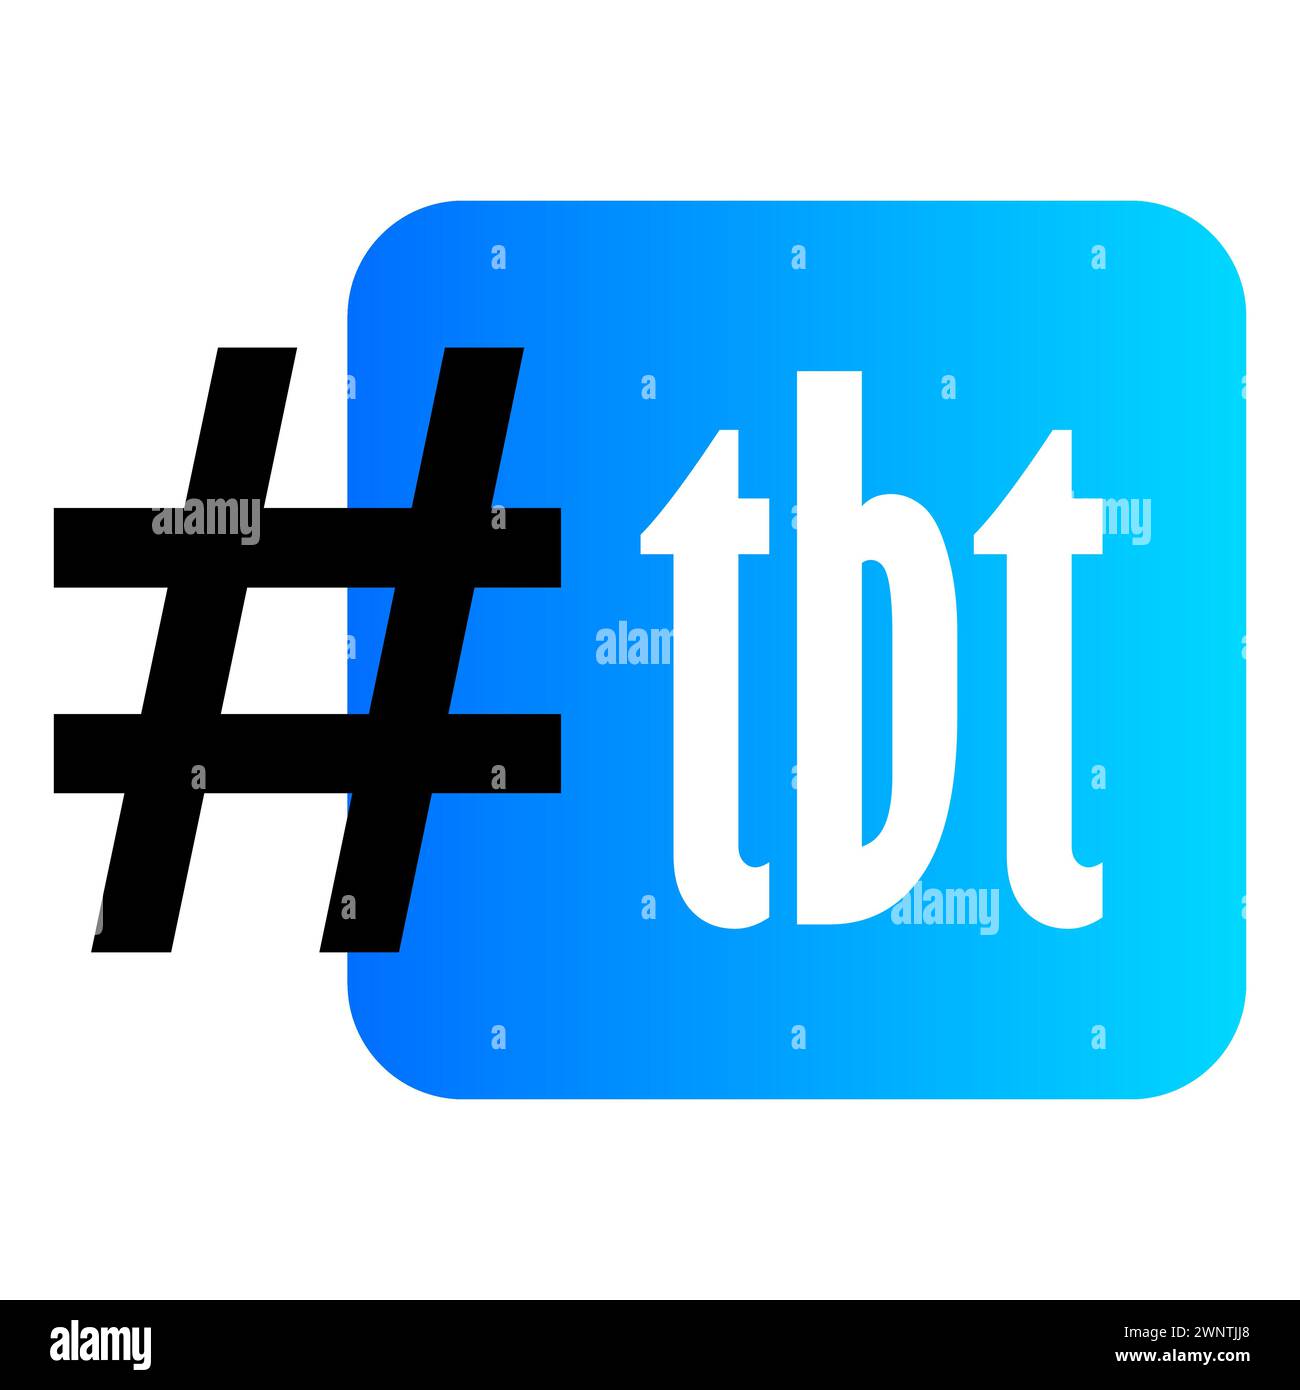 Tbt hashtag. Thursday throwback symbol. Vector illustration. EPS 10. Stock image. Stock Vector